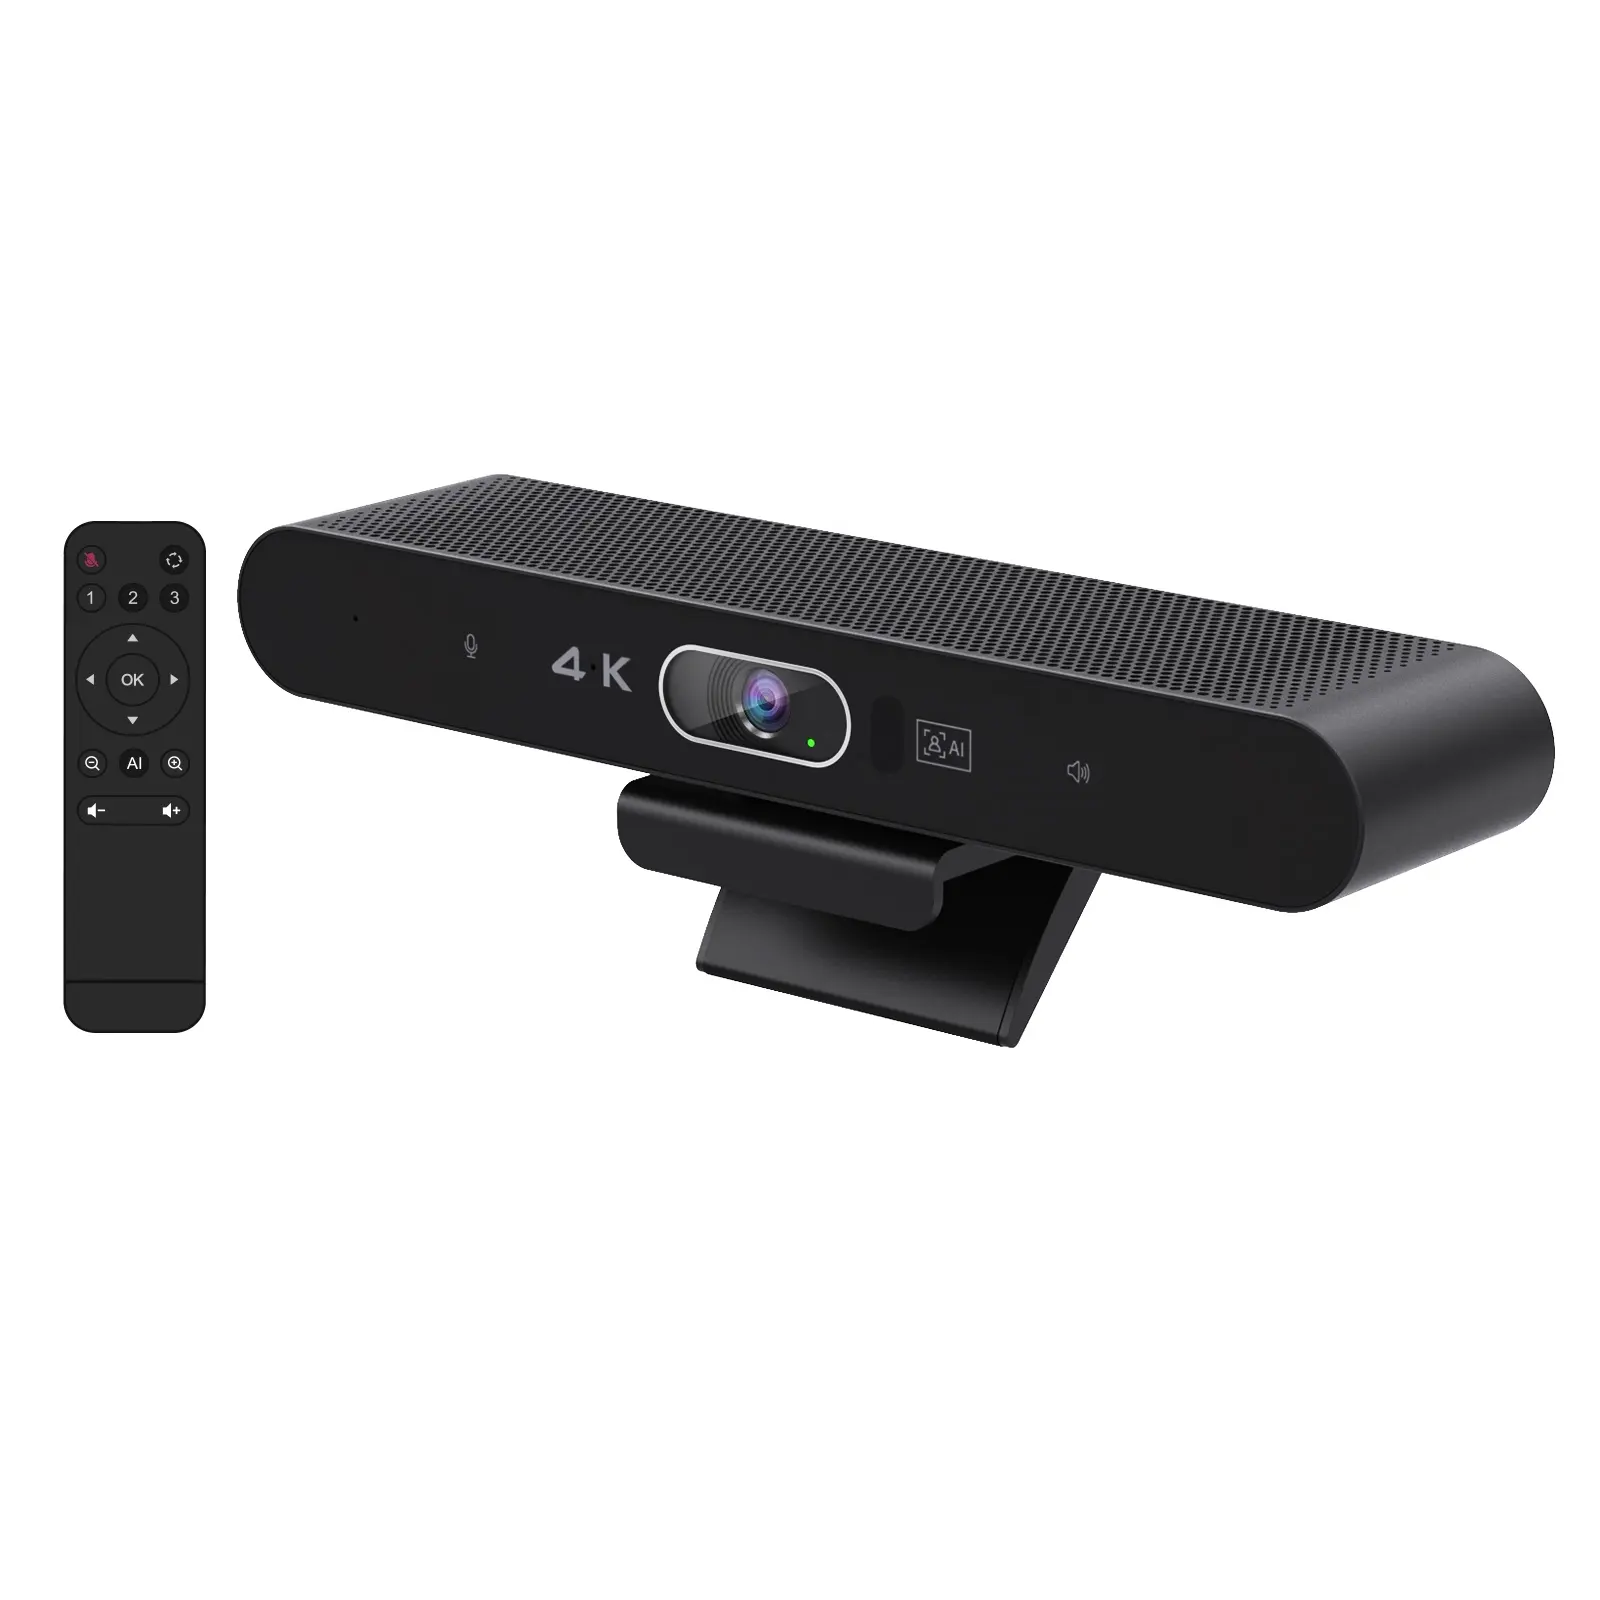 4k USB Webcam Plug & Play Home Office Video konferenz kamera